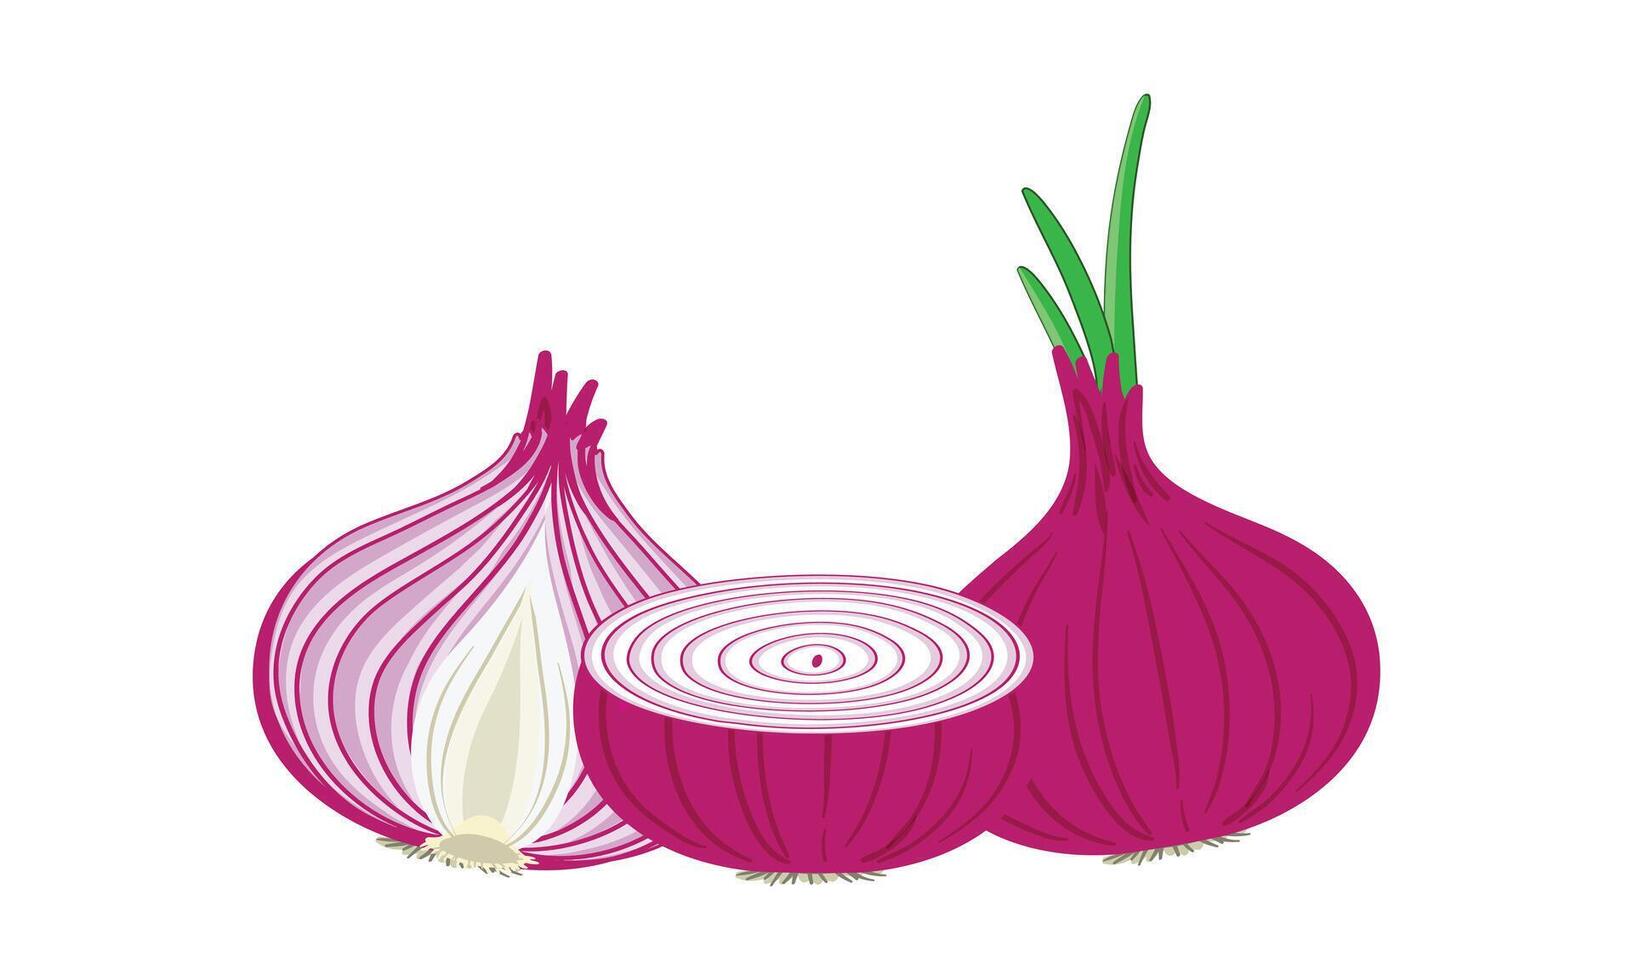 Onion Design And Illustration. vector